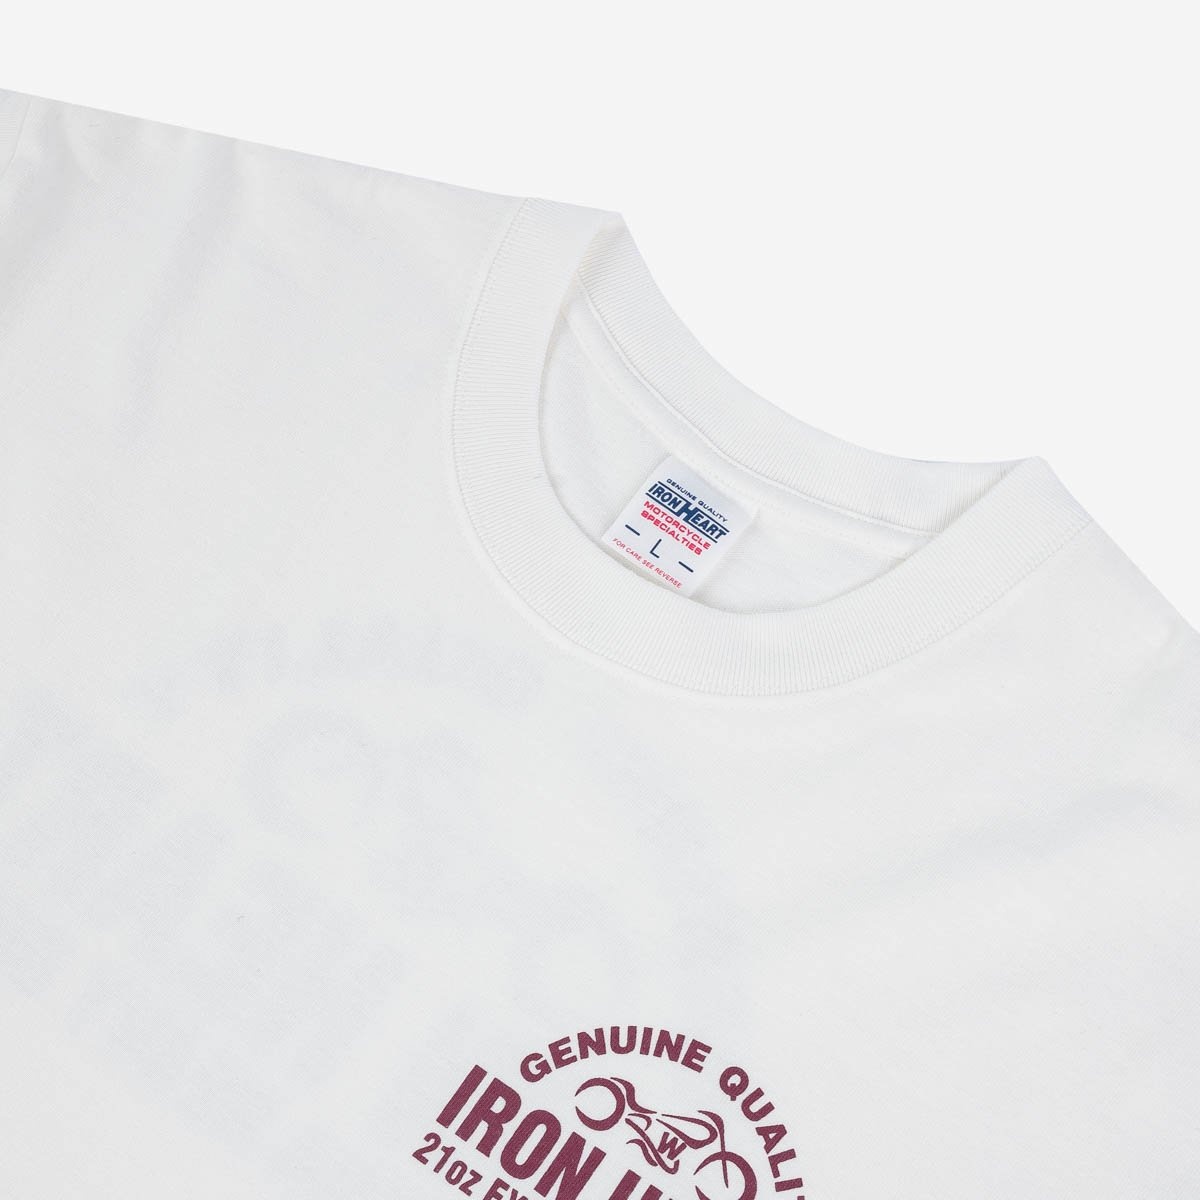 IHTL-2302-WHT 7.5oz Printed Loopwheel Crew Neck Long Sleeved T-Shirt - White - 7